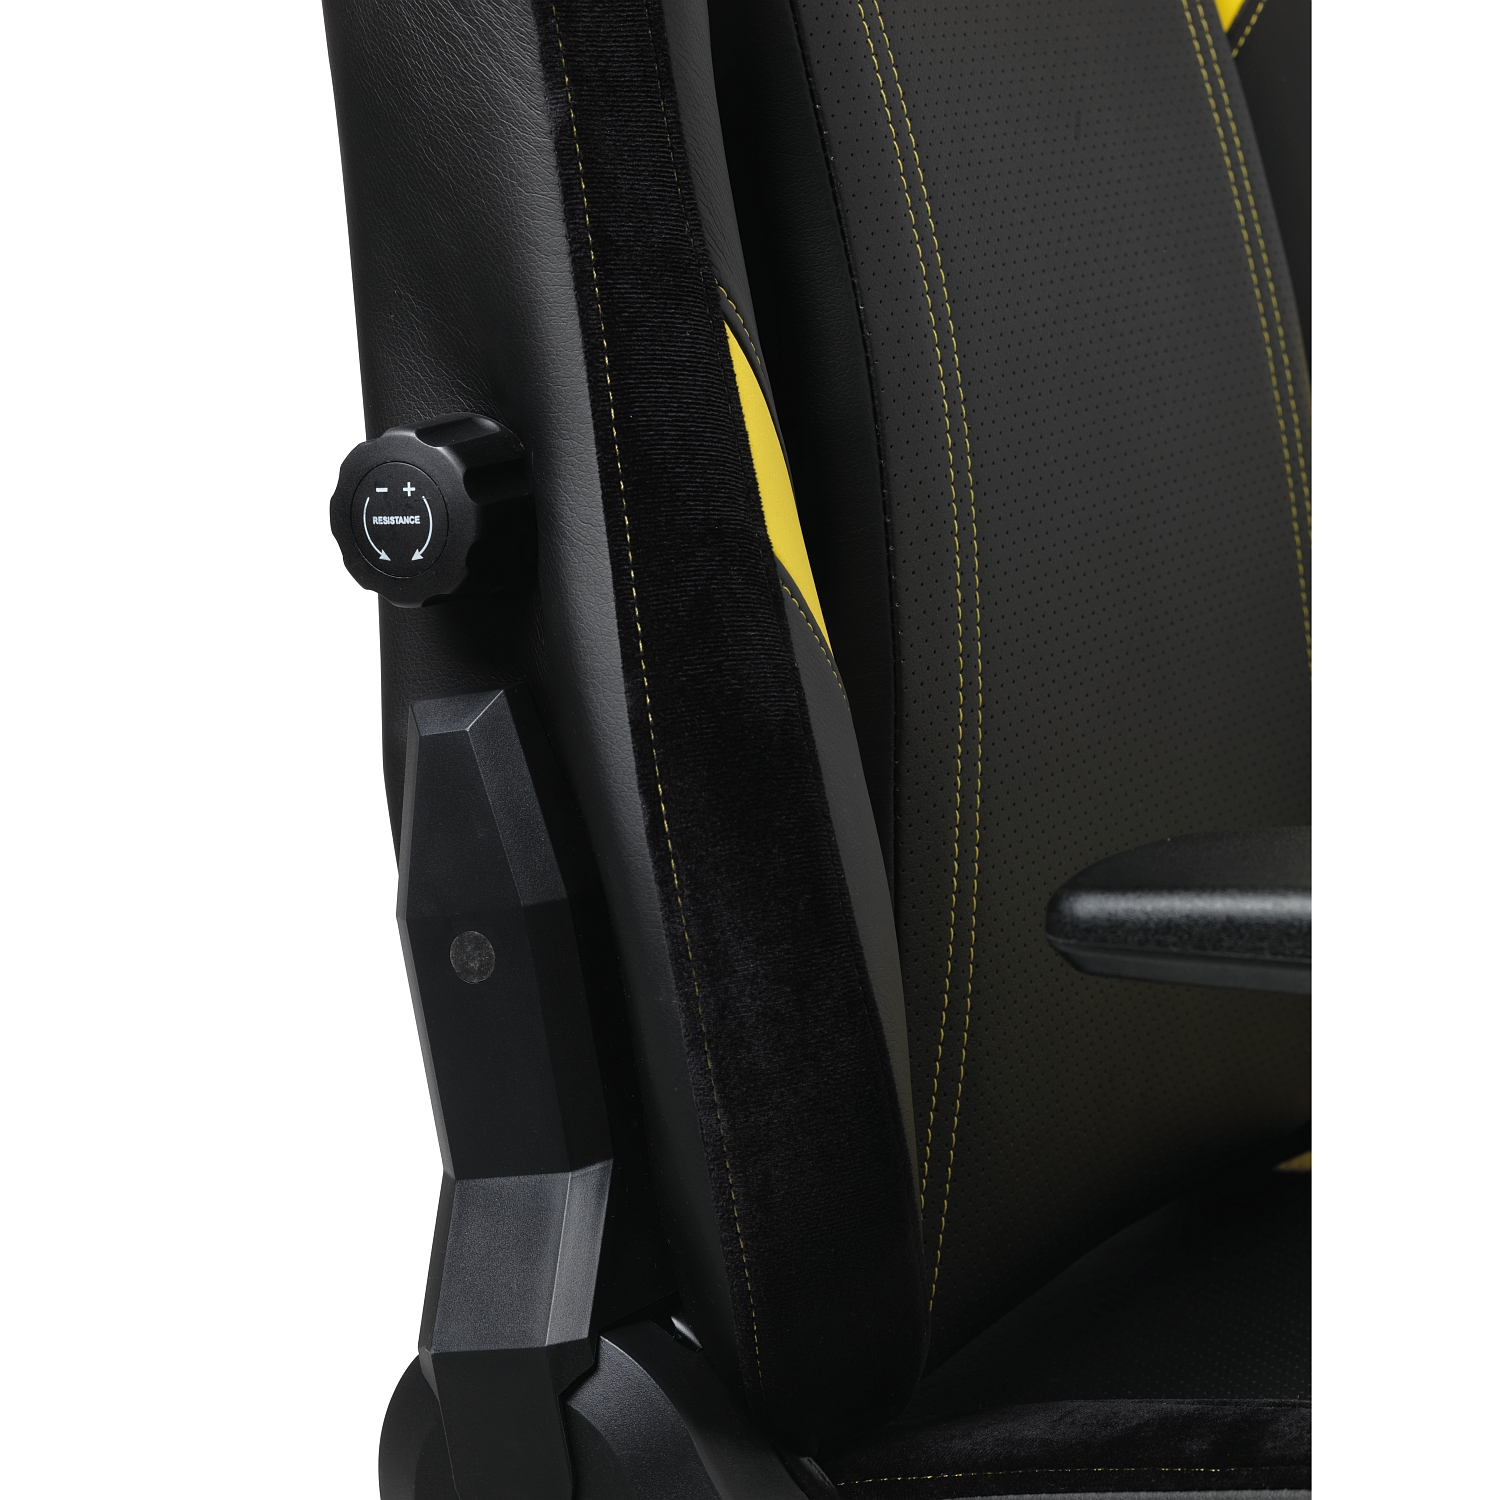 E-SPORT Stuhl, Ergo L33T Pro Gelb / Schwarz Gaming